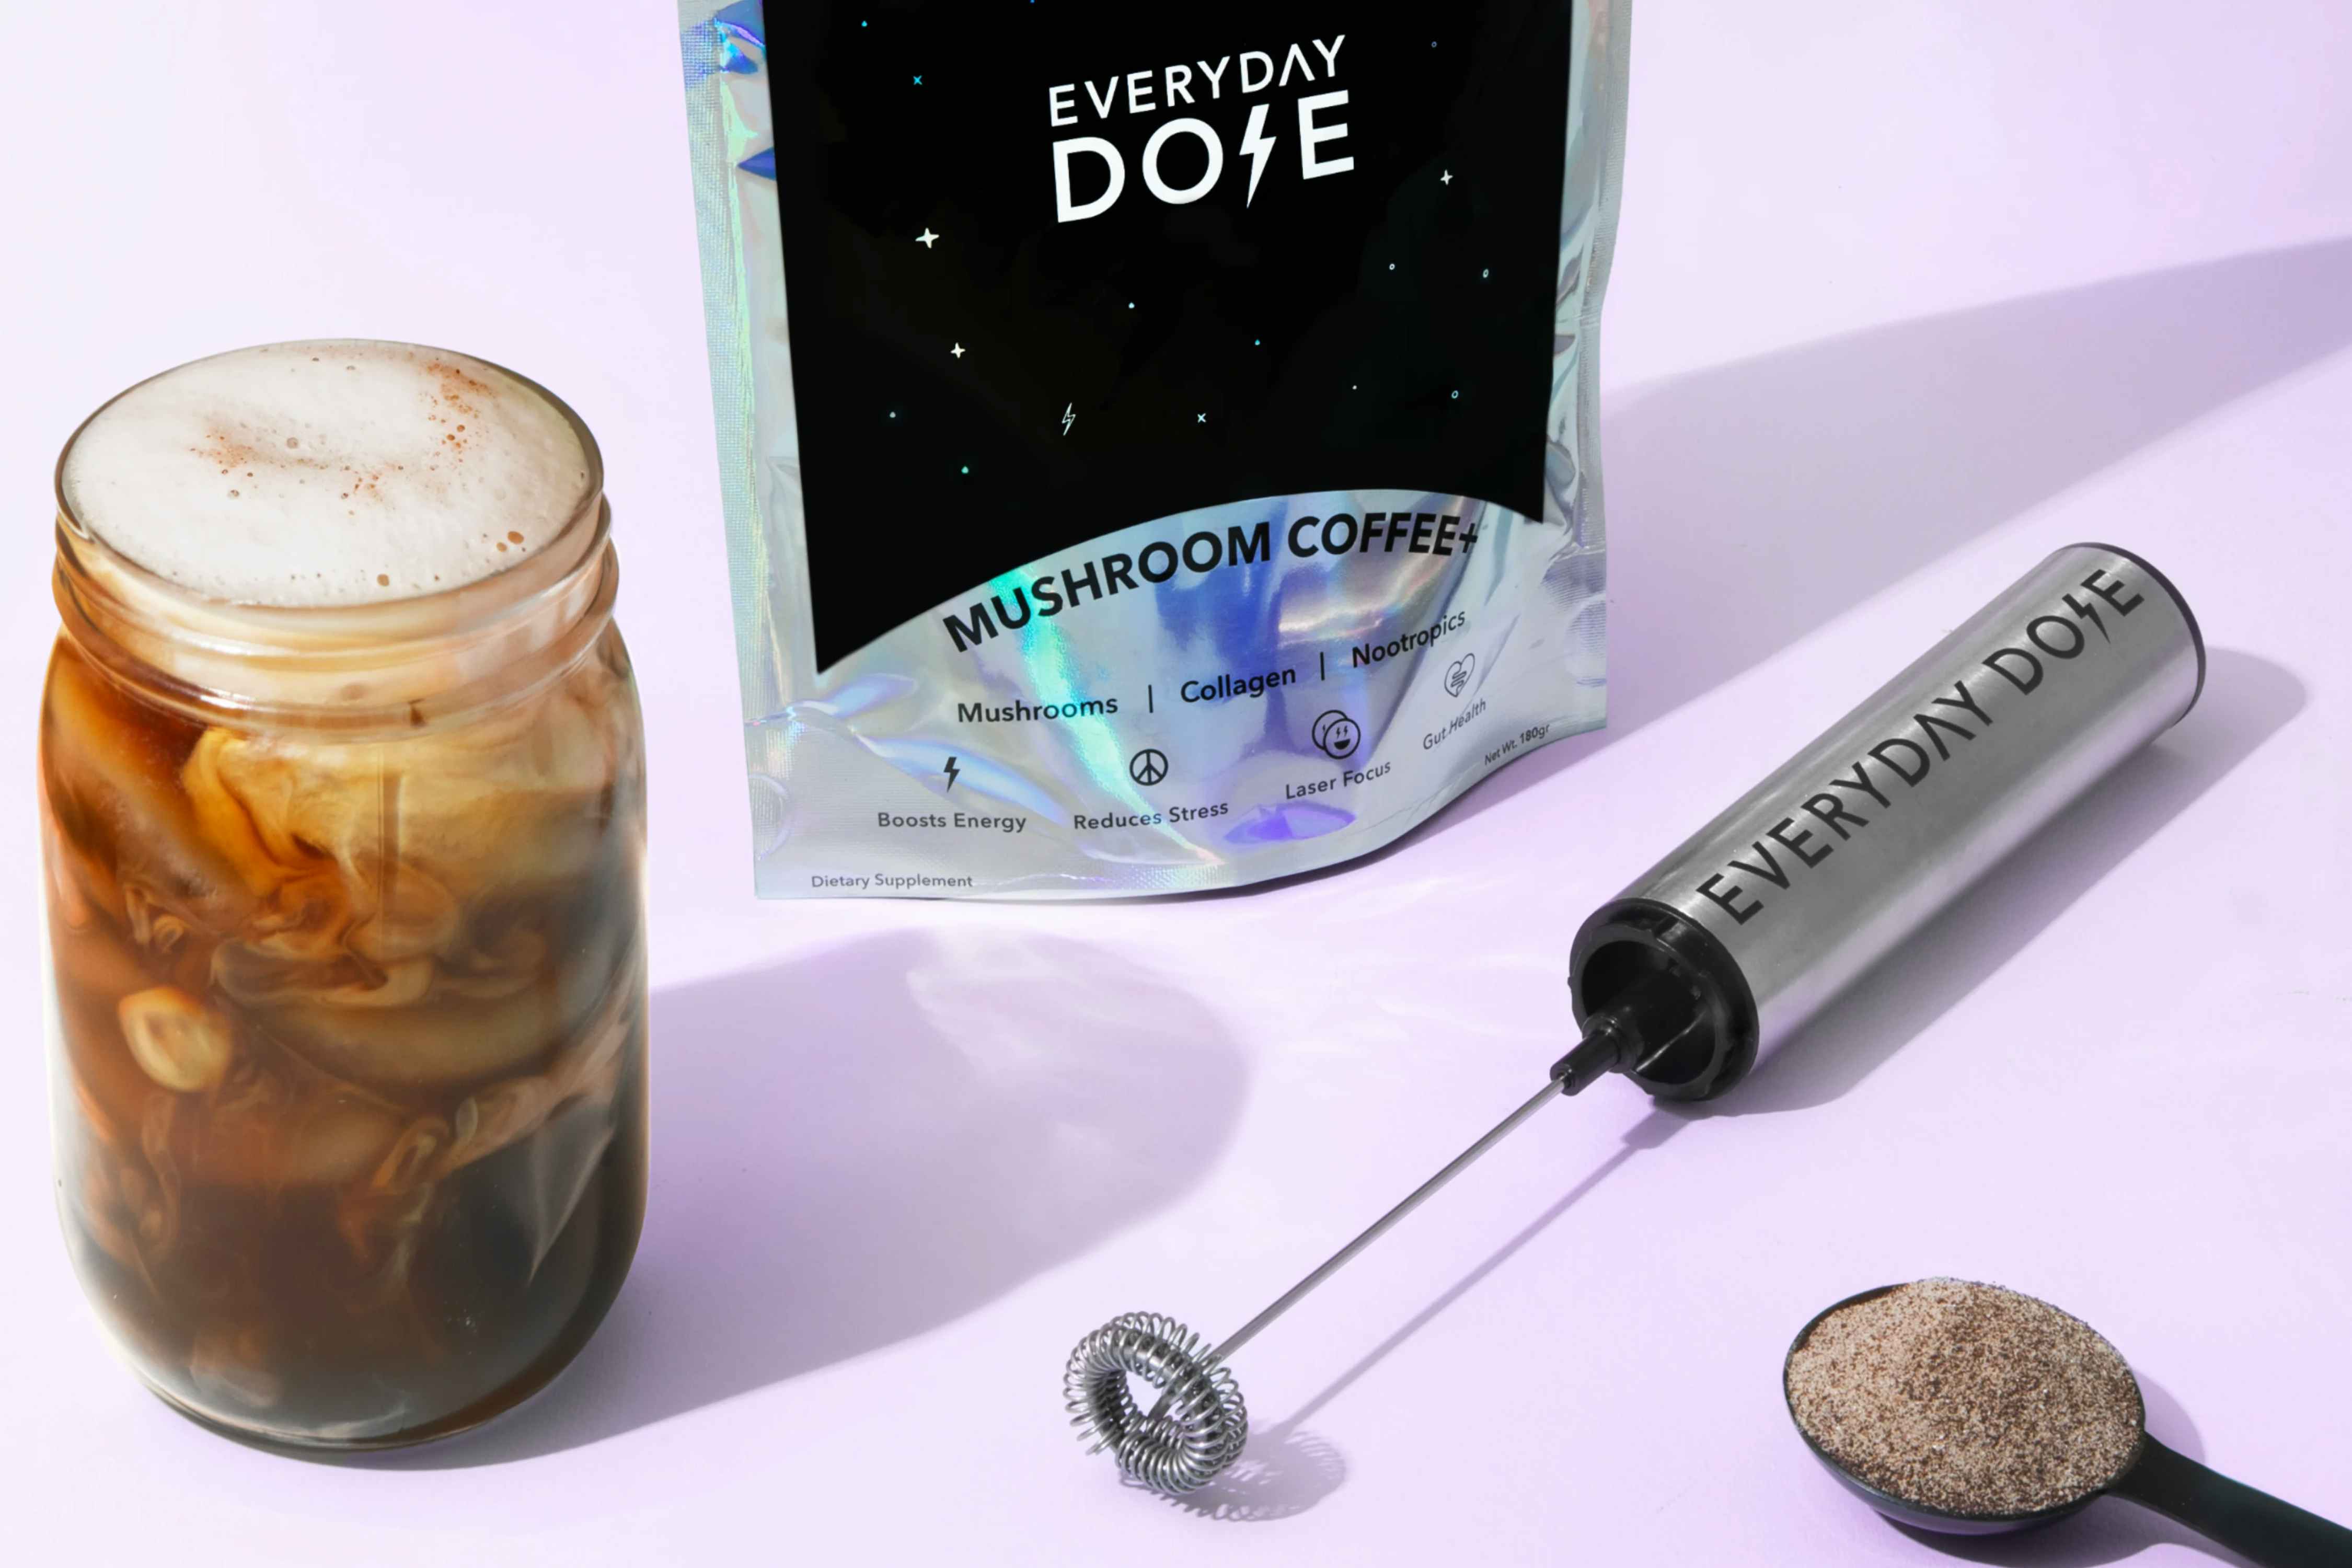 Everyday Dose Mushroom Coffee Starter Kit, Just $27 Shipped